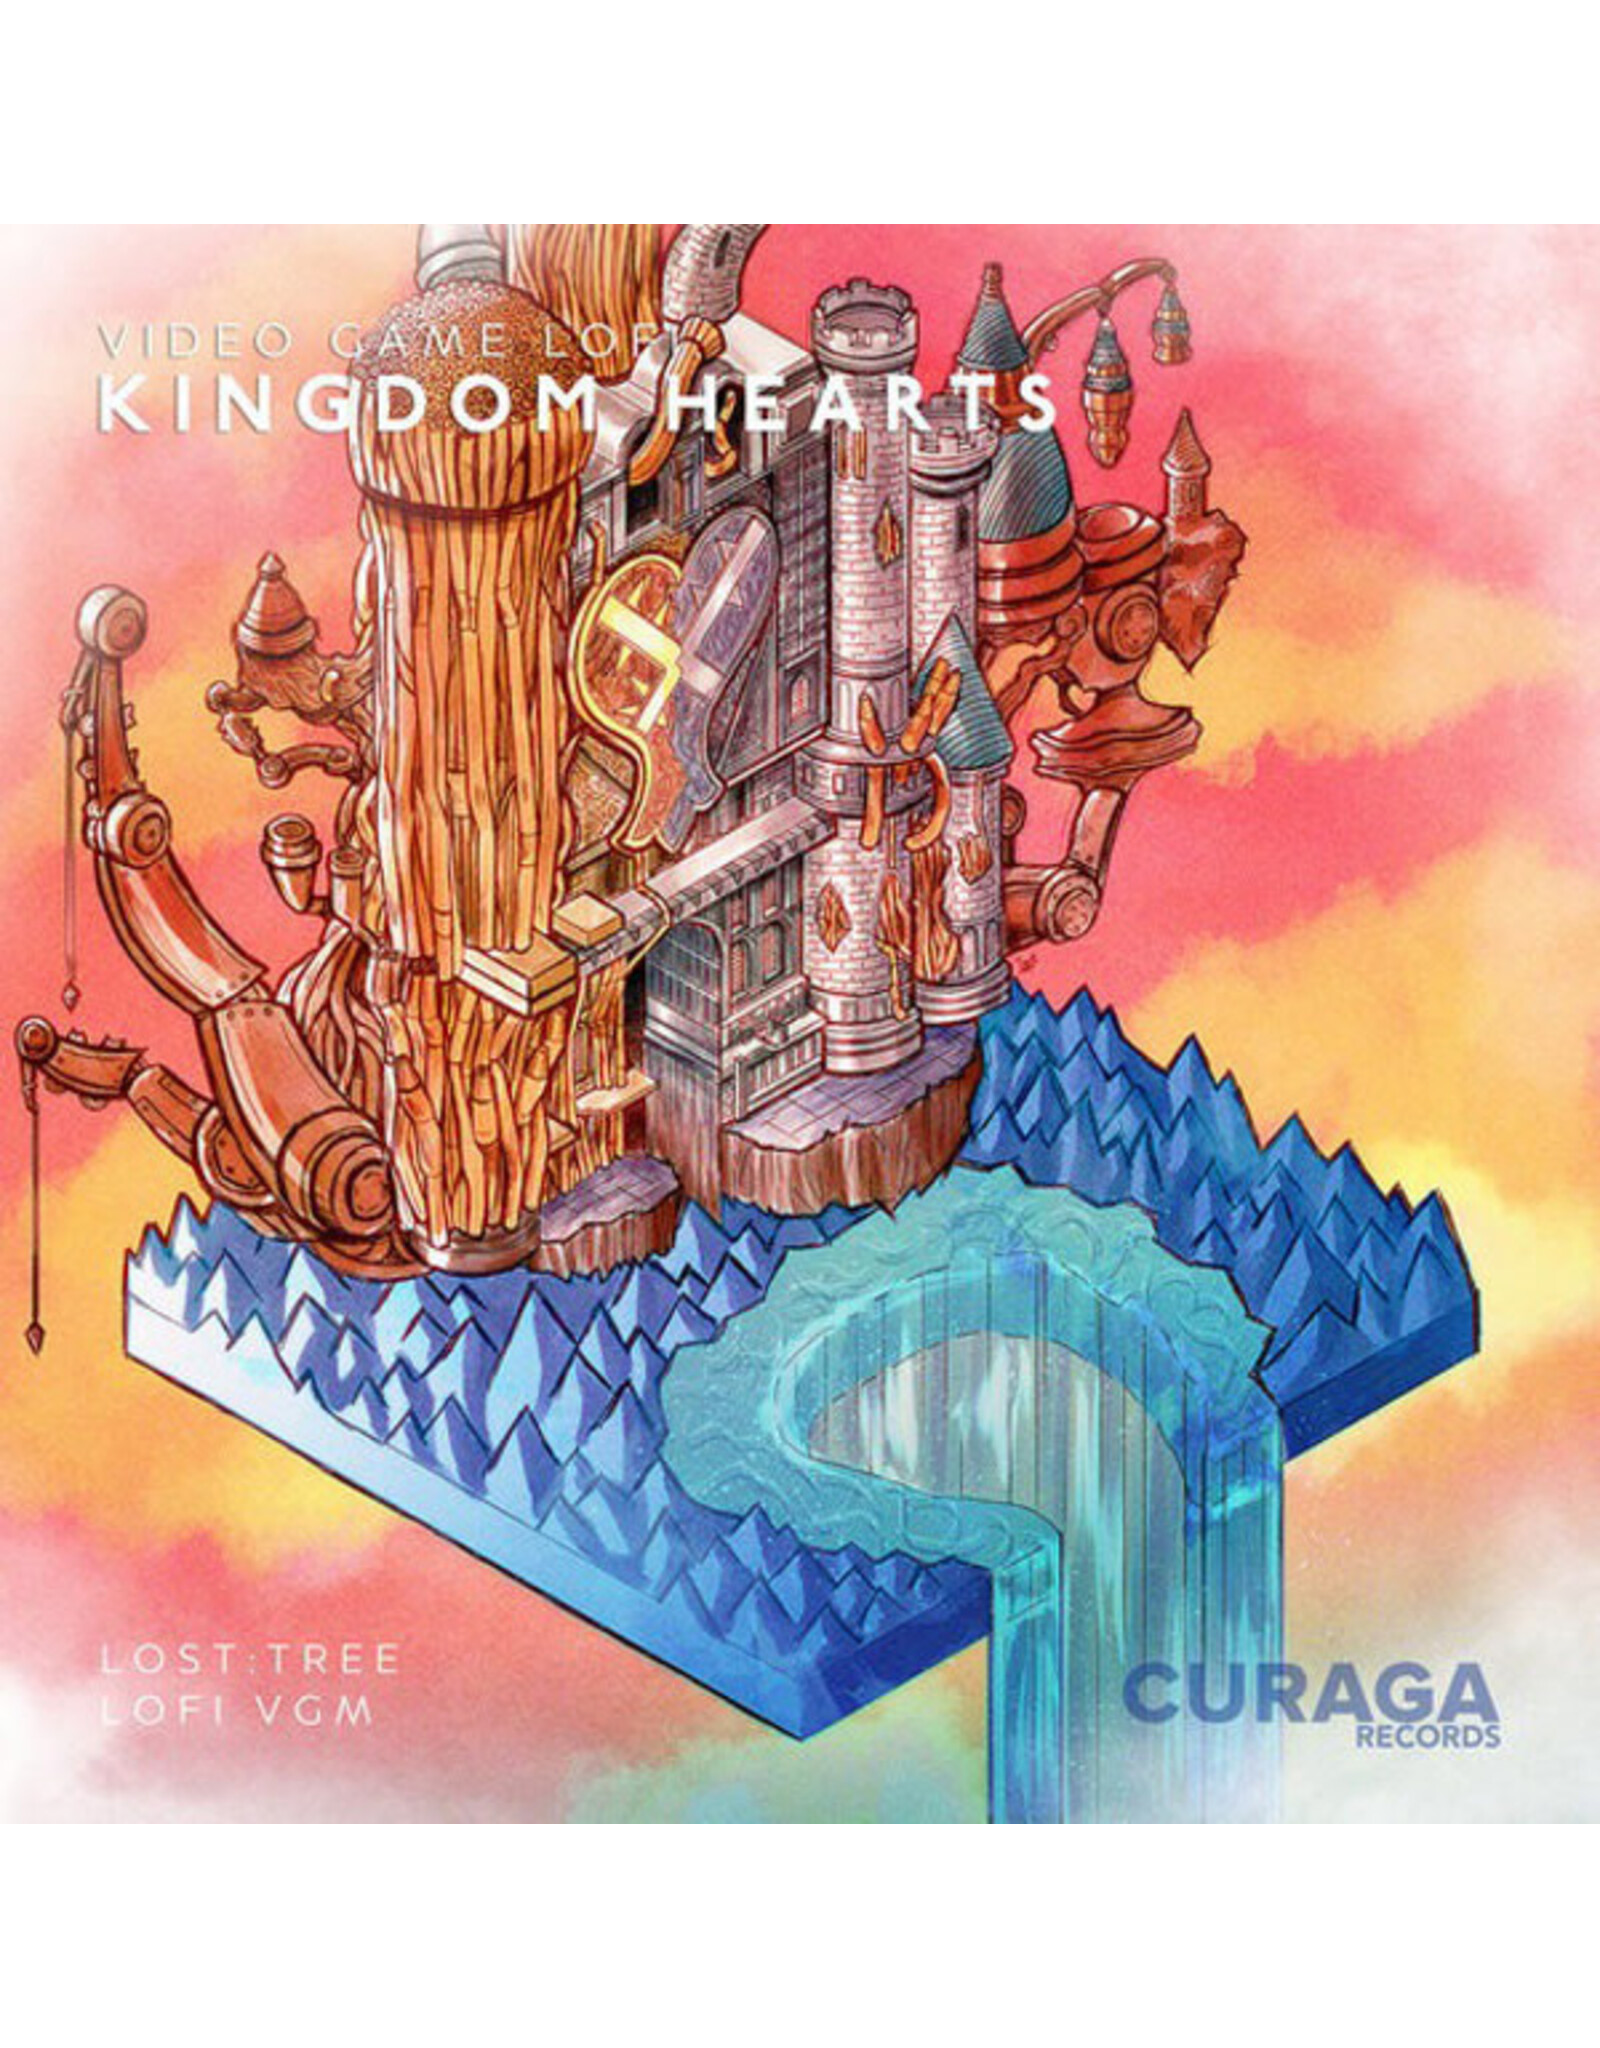 Curaga Records **CLEARANCE** Video Game Lofi: Kingdom Hearts